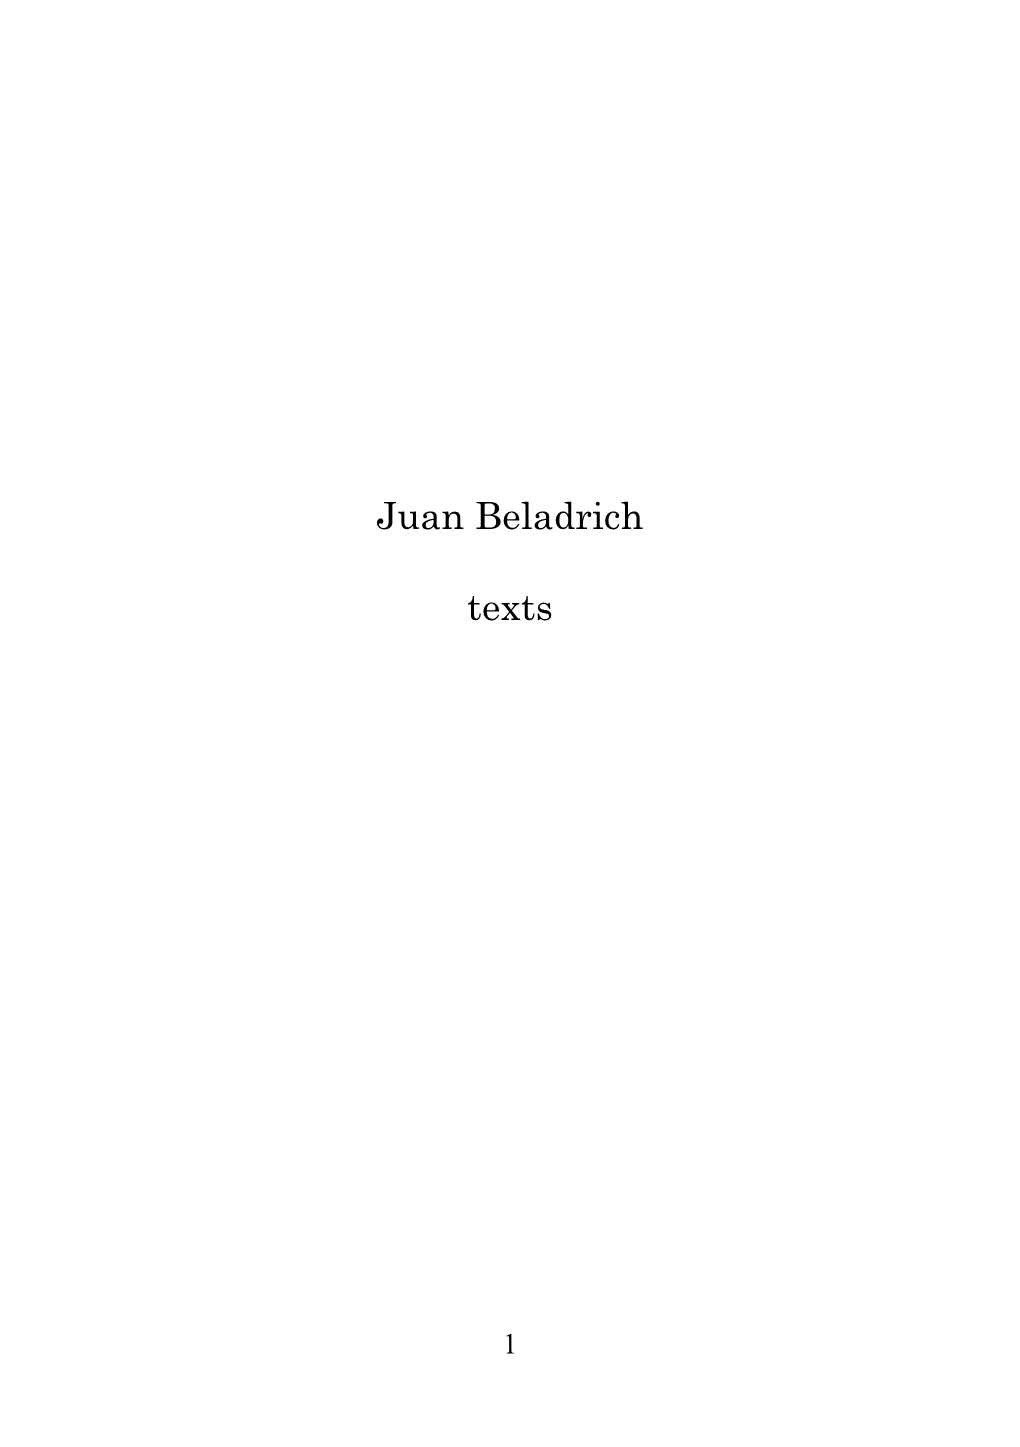 Juan Beladrich Texts